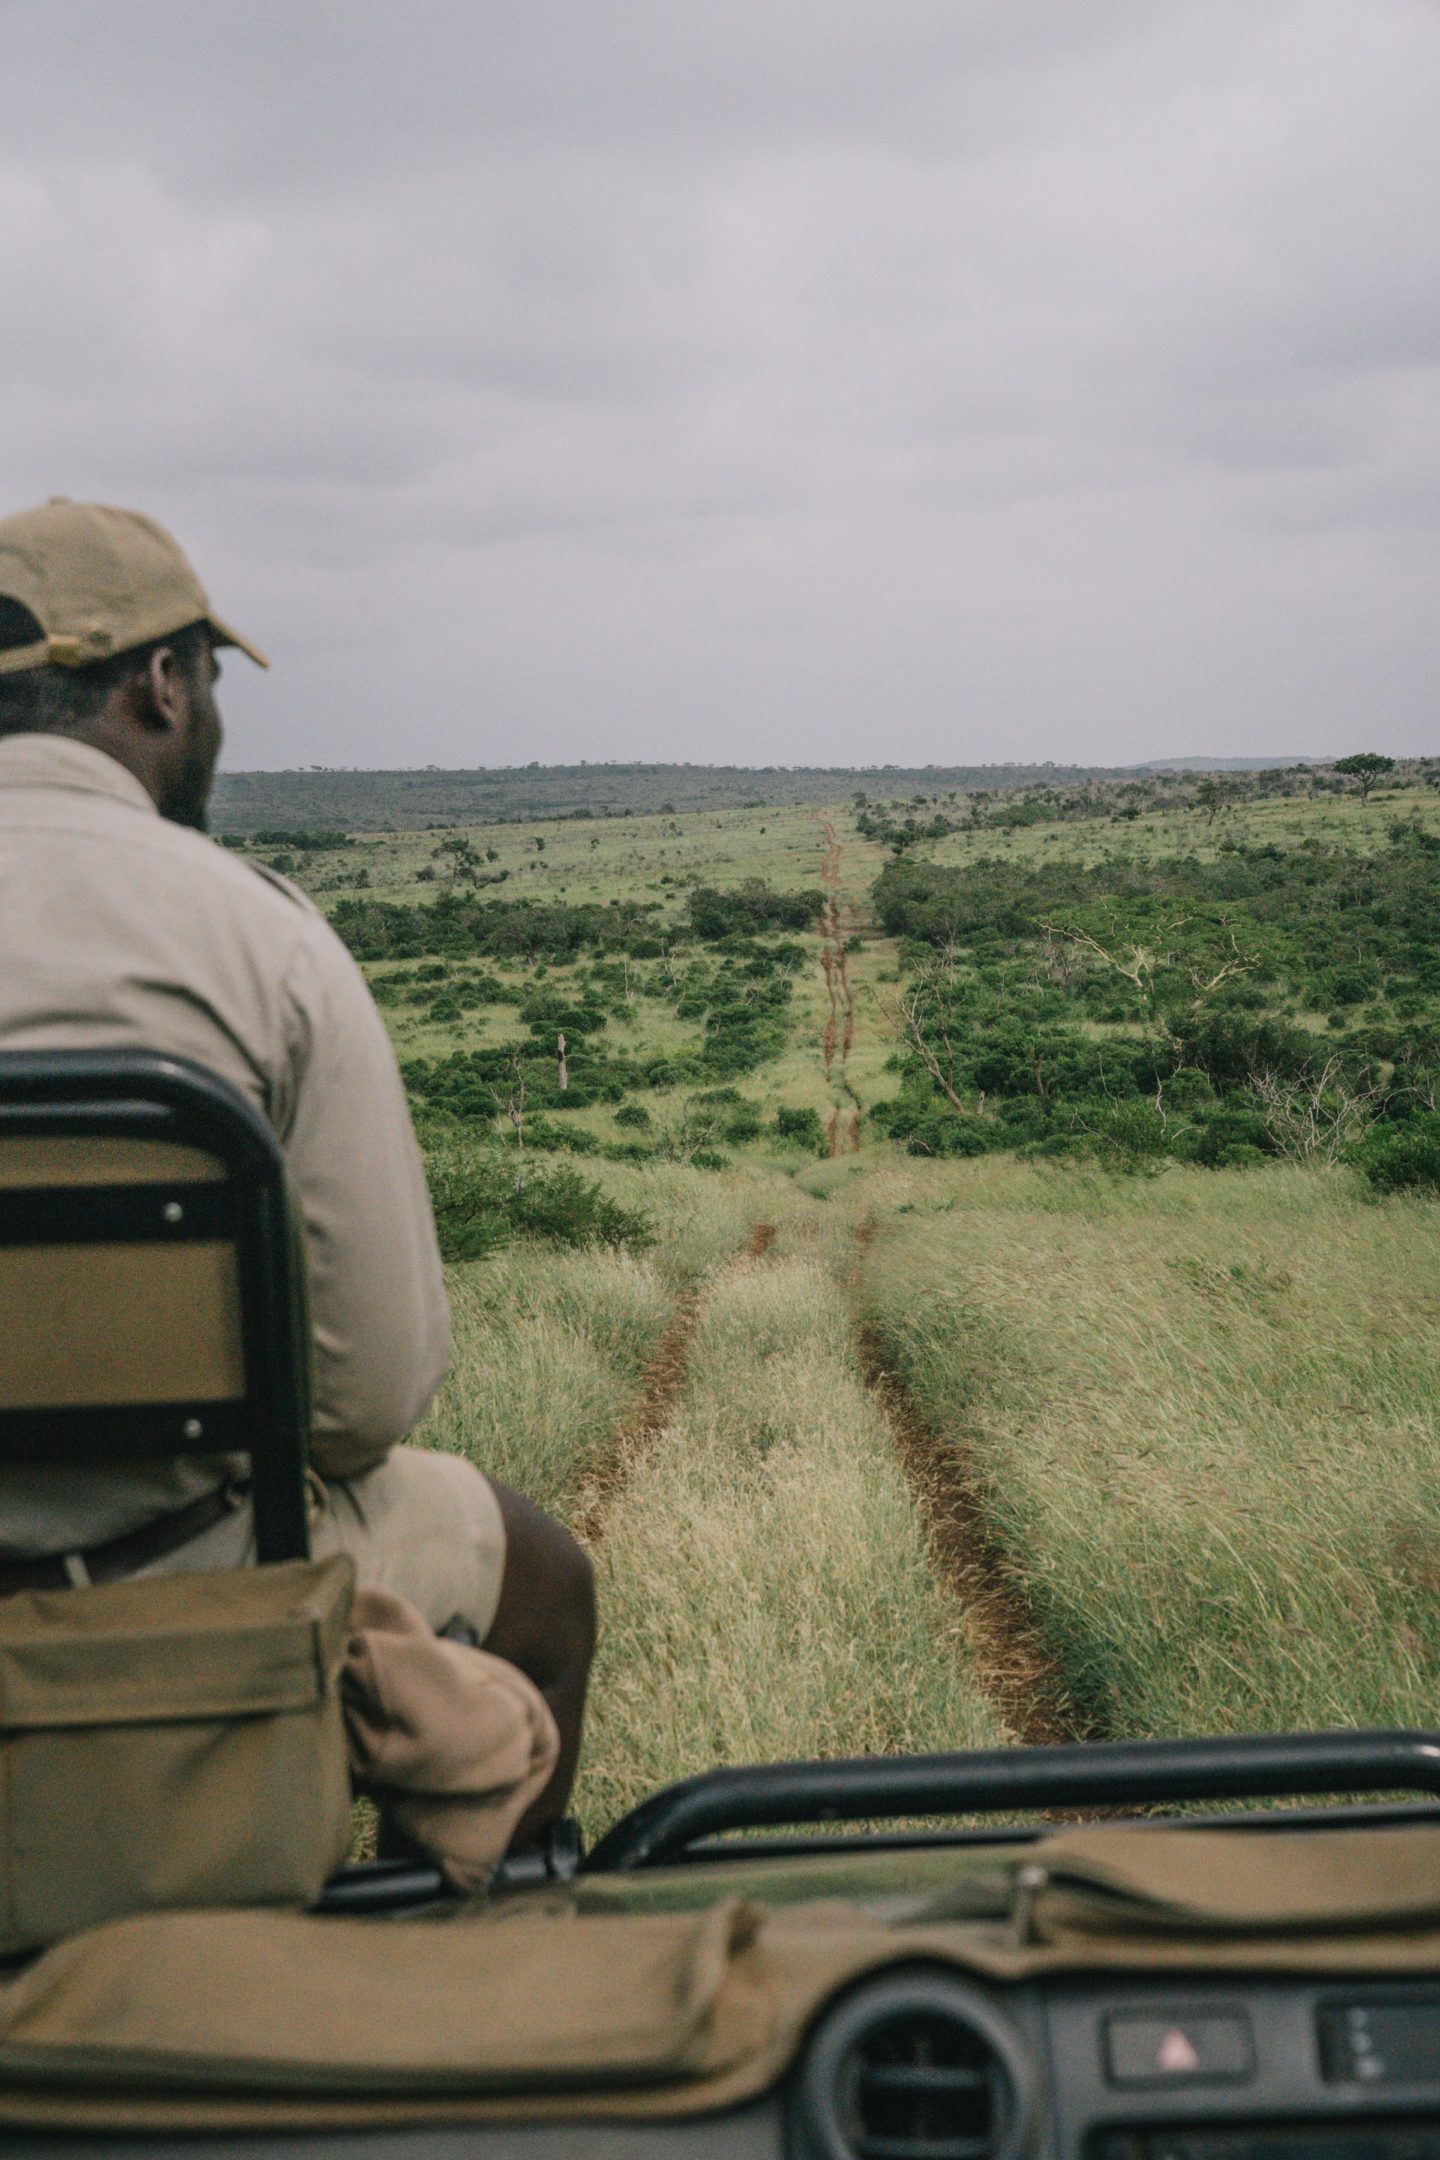 Rhino Conservation Trip | World of Wanderlust